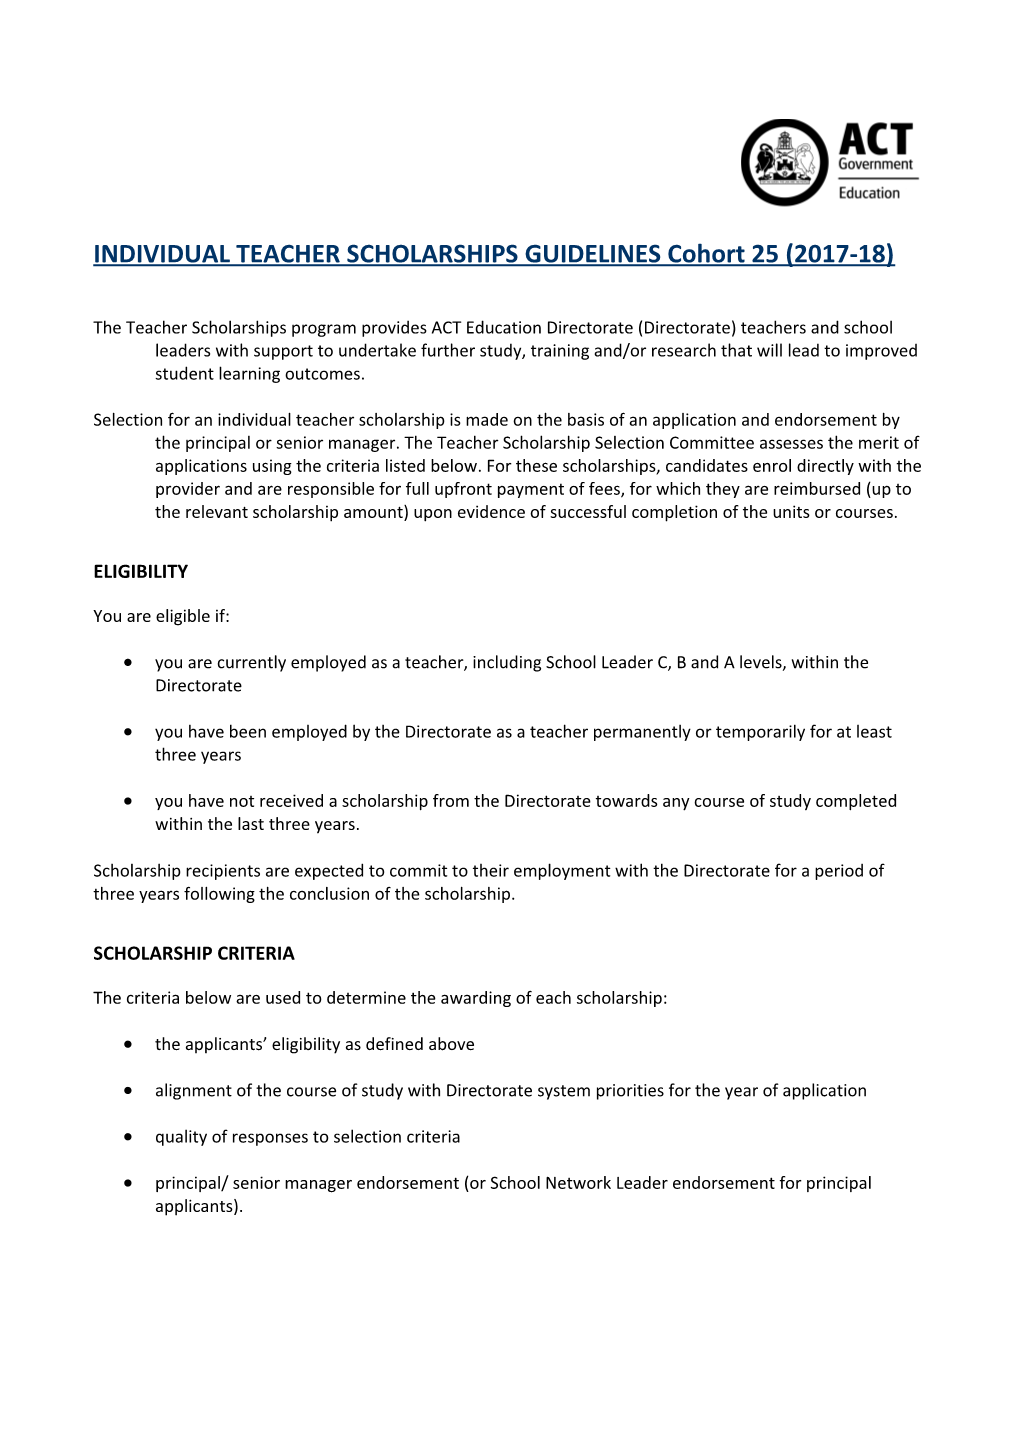 Individual Teacher Scholarships Guidelines Cohort 25